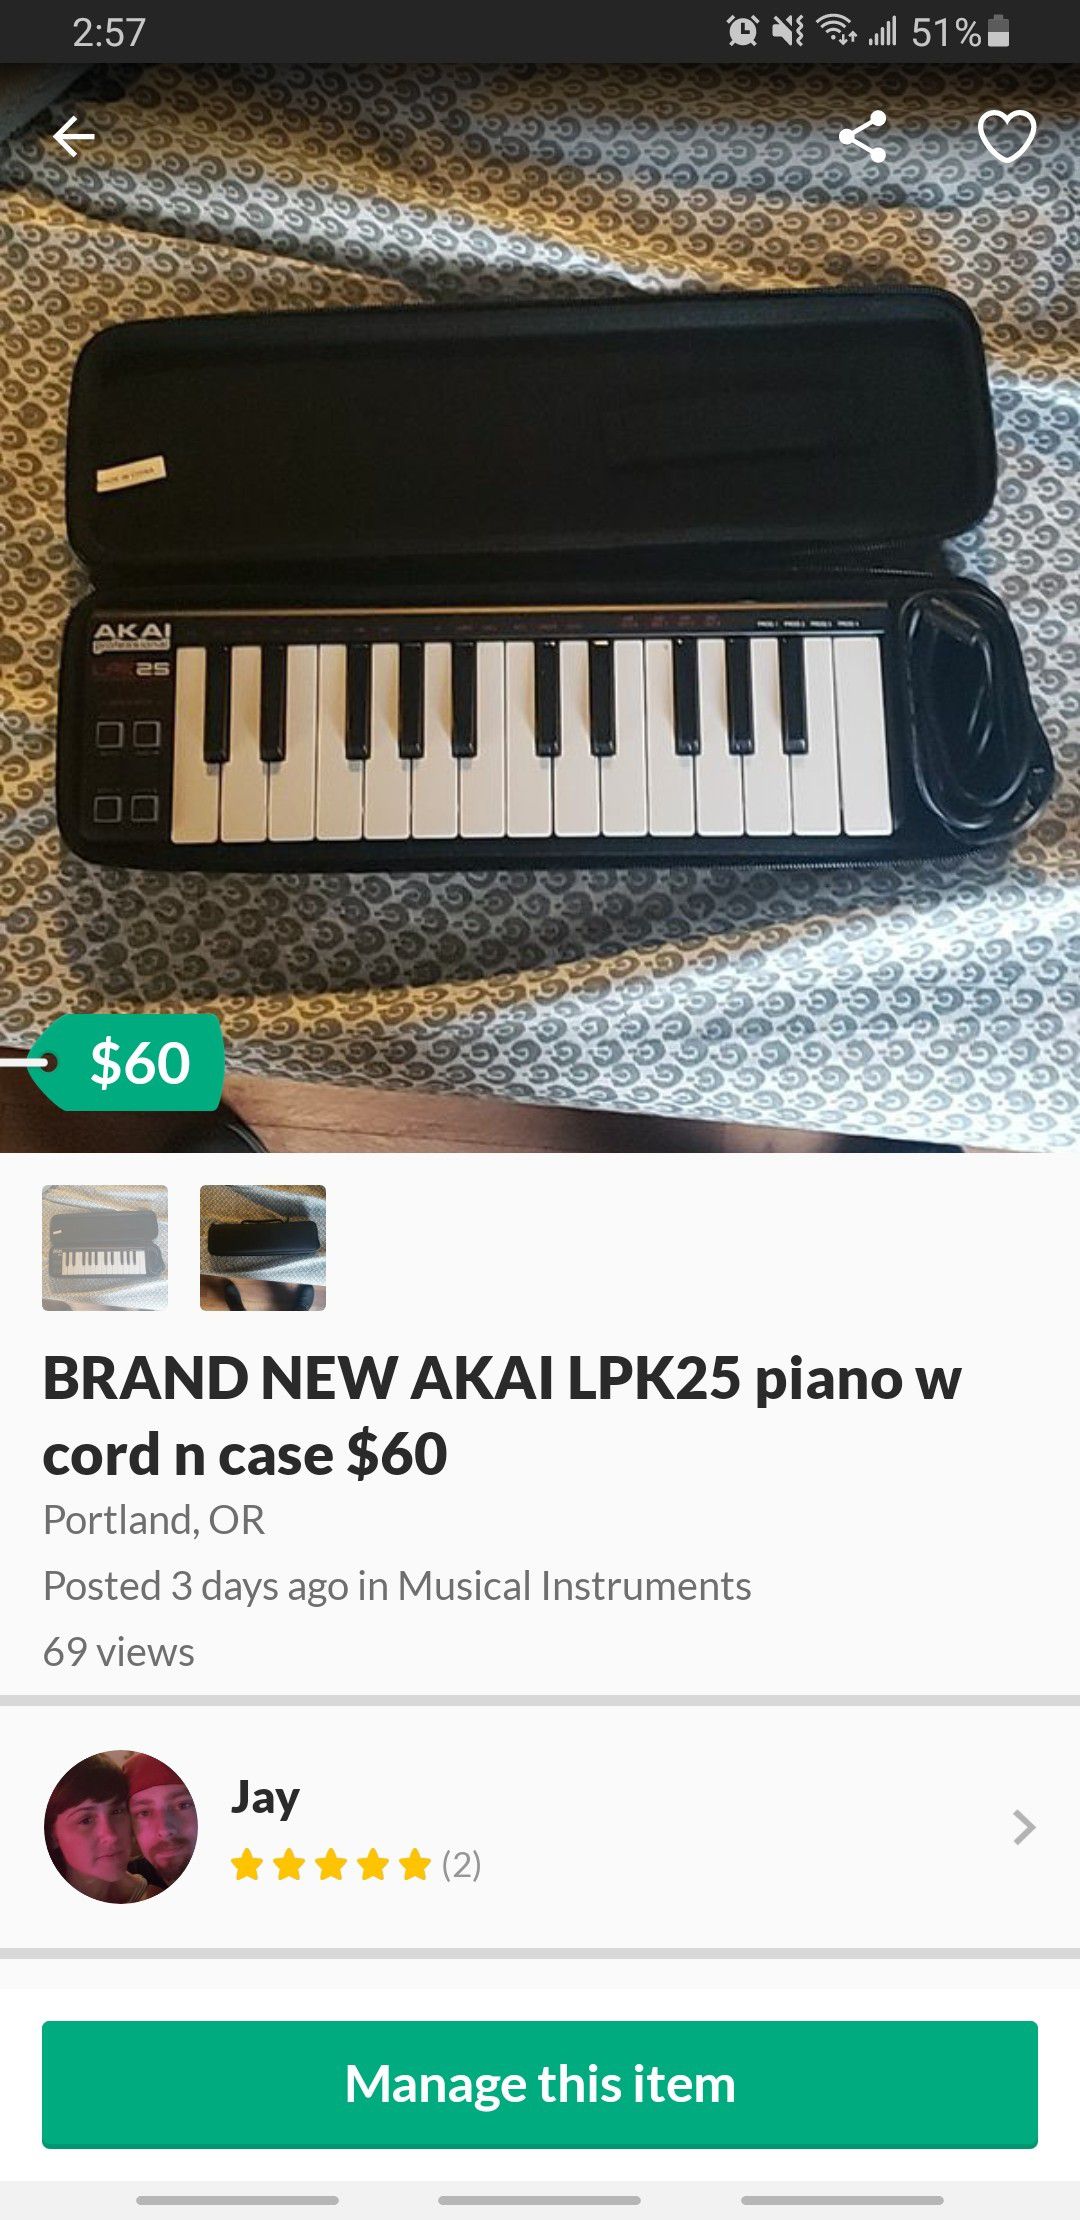 BRAND NEW AKAI LPK25 PIANO W CORD N CASE $60 obo